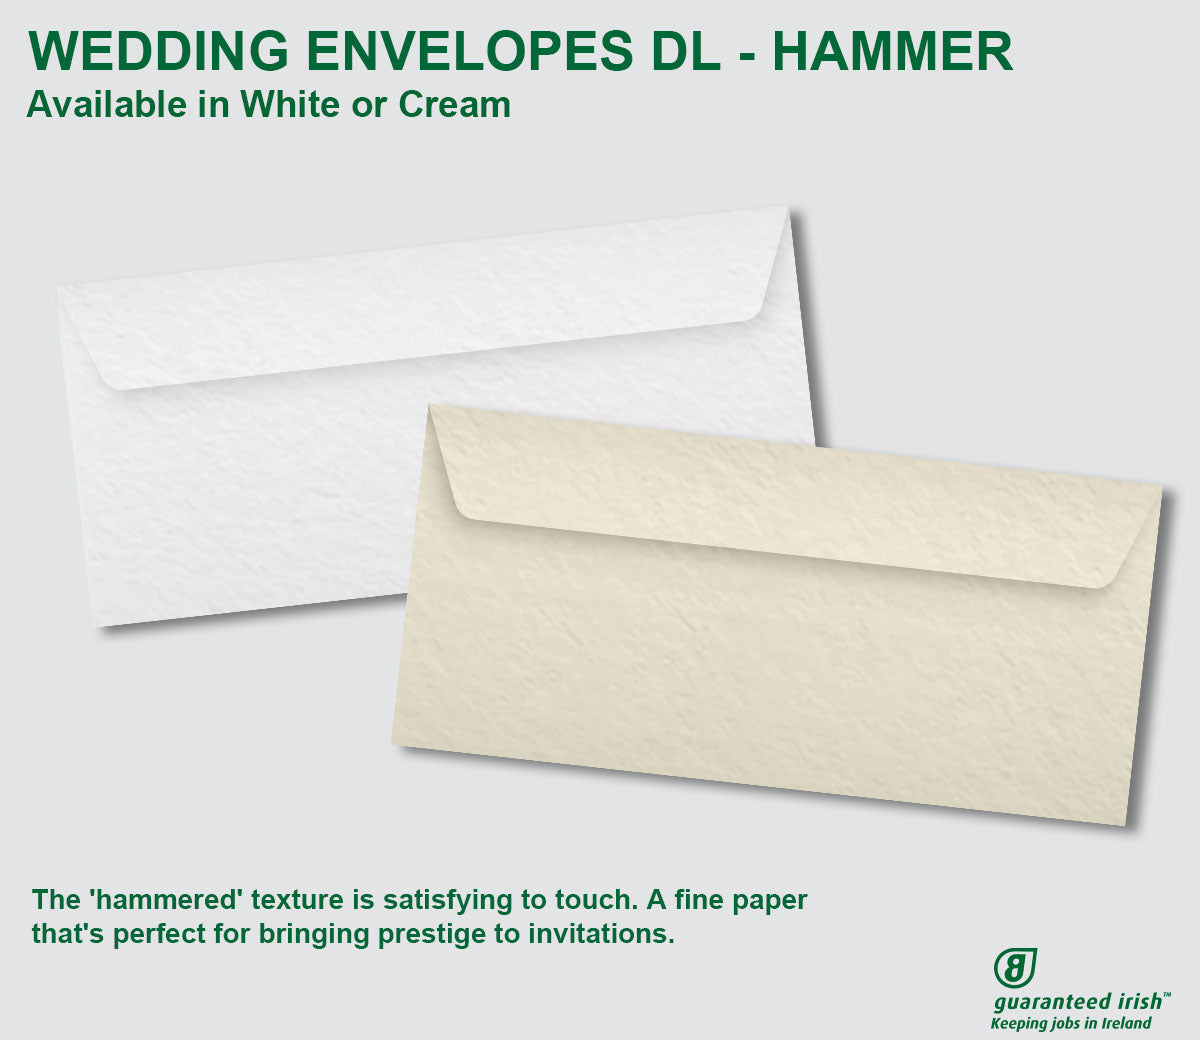 Wedding Envelopes DL - Hammer